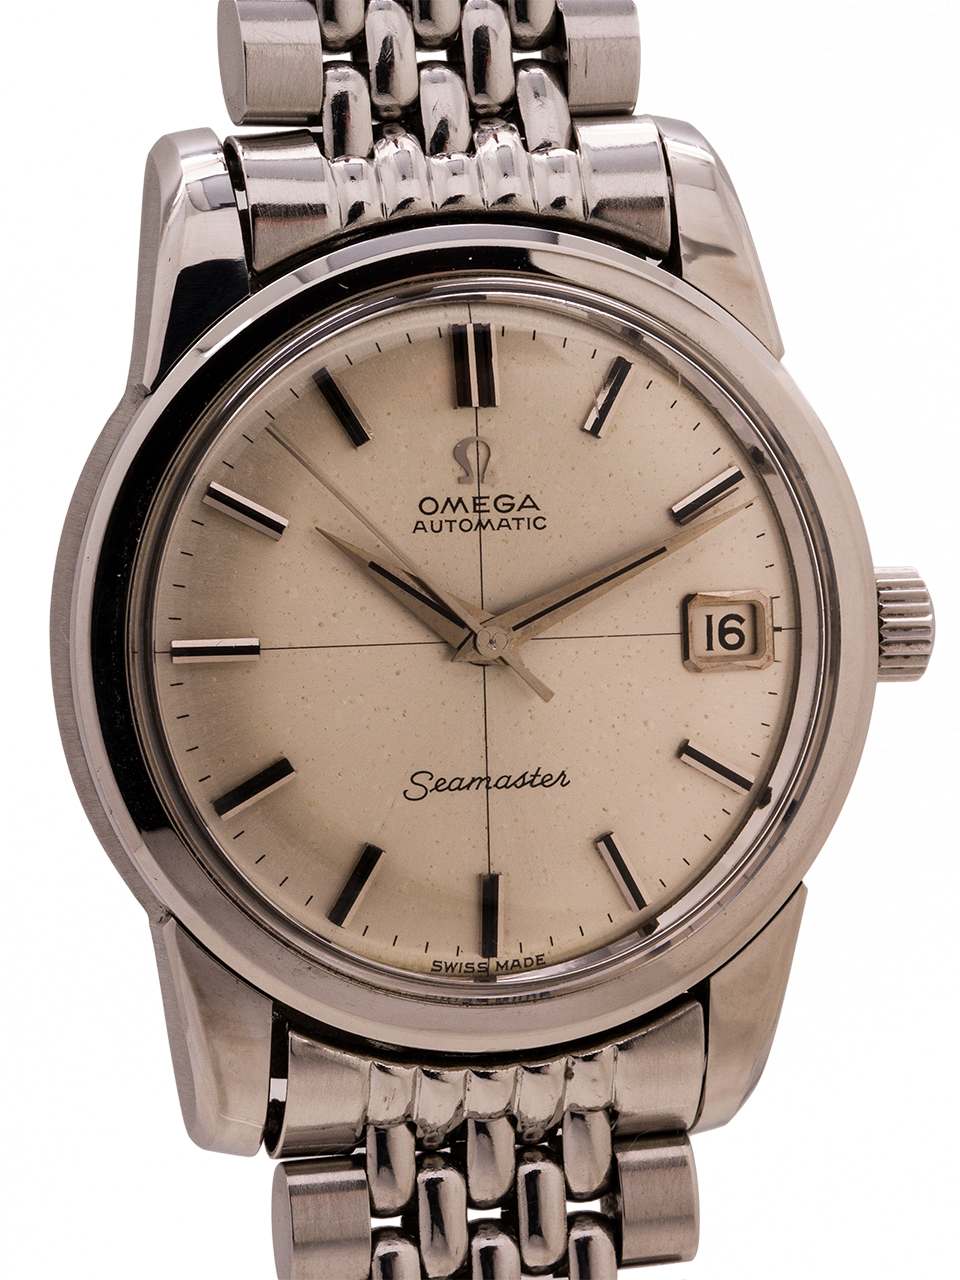 1966 omega watch